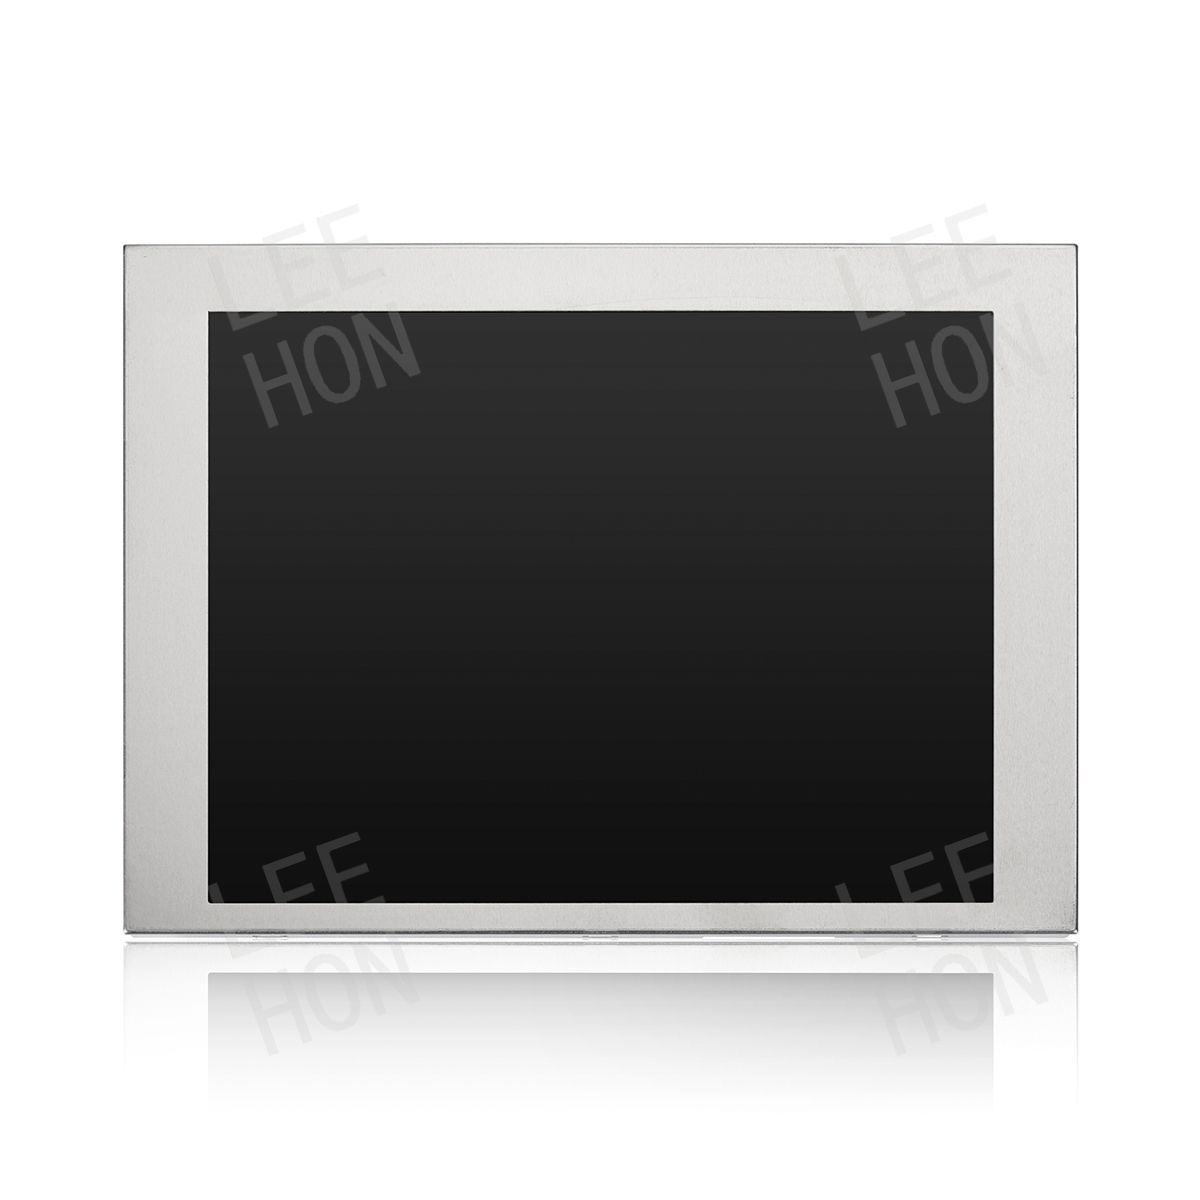 AUO 5.7 Inch 640x480 VGA LCD Panel High Brightness Display G057VN01 V2 700nits and CMOS